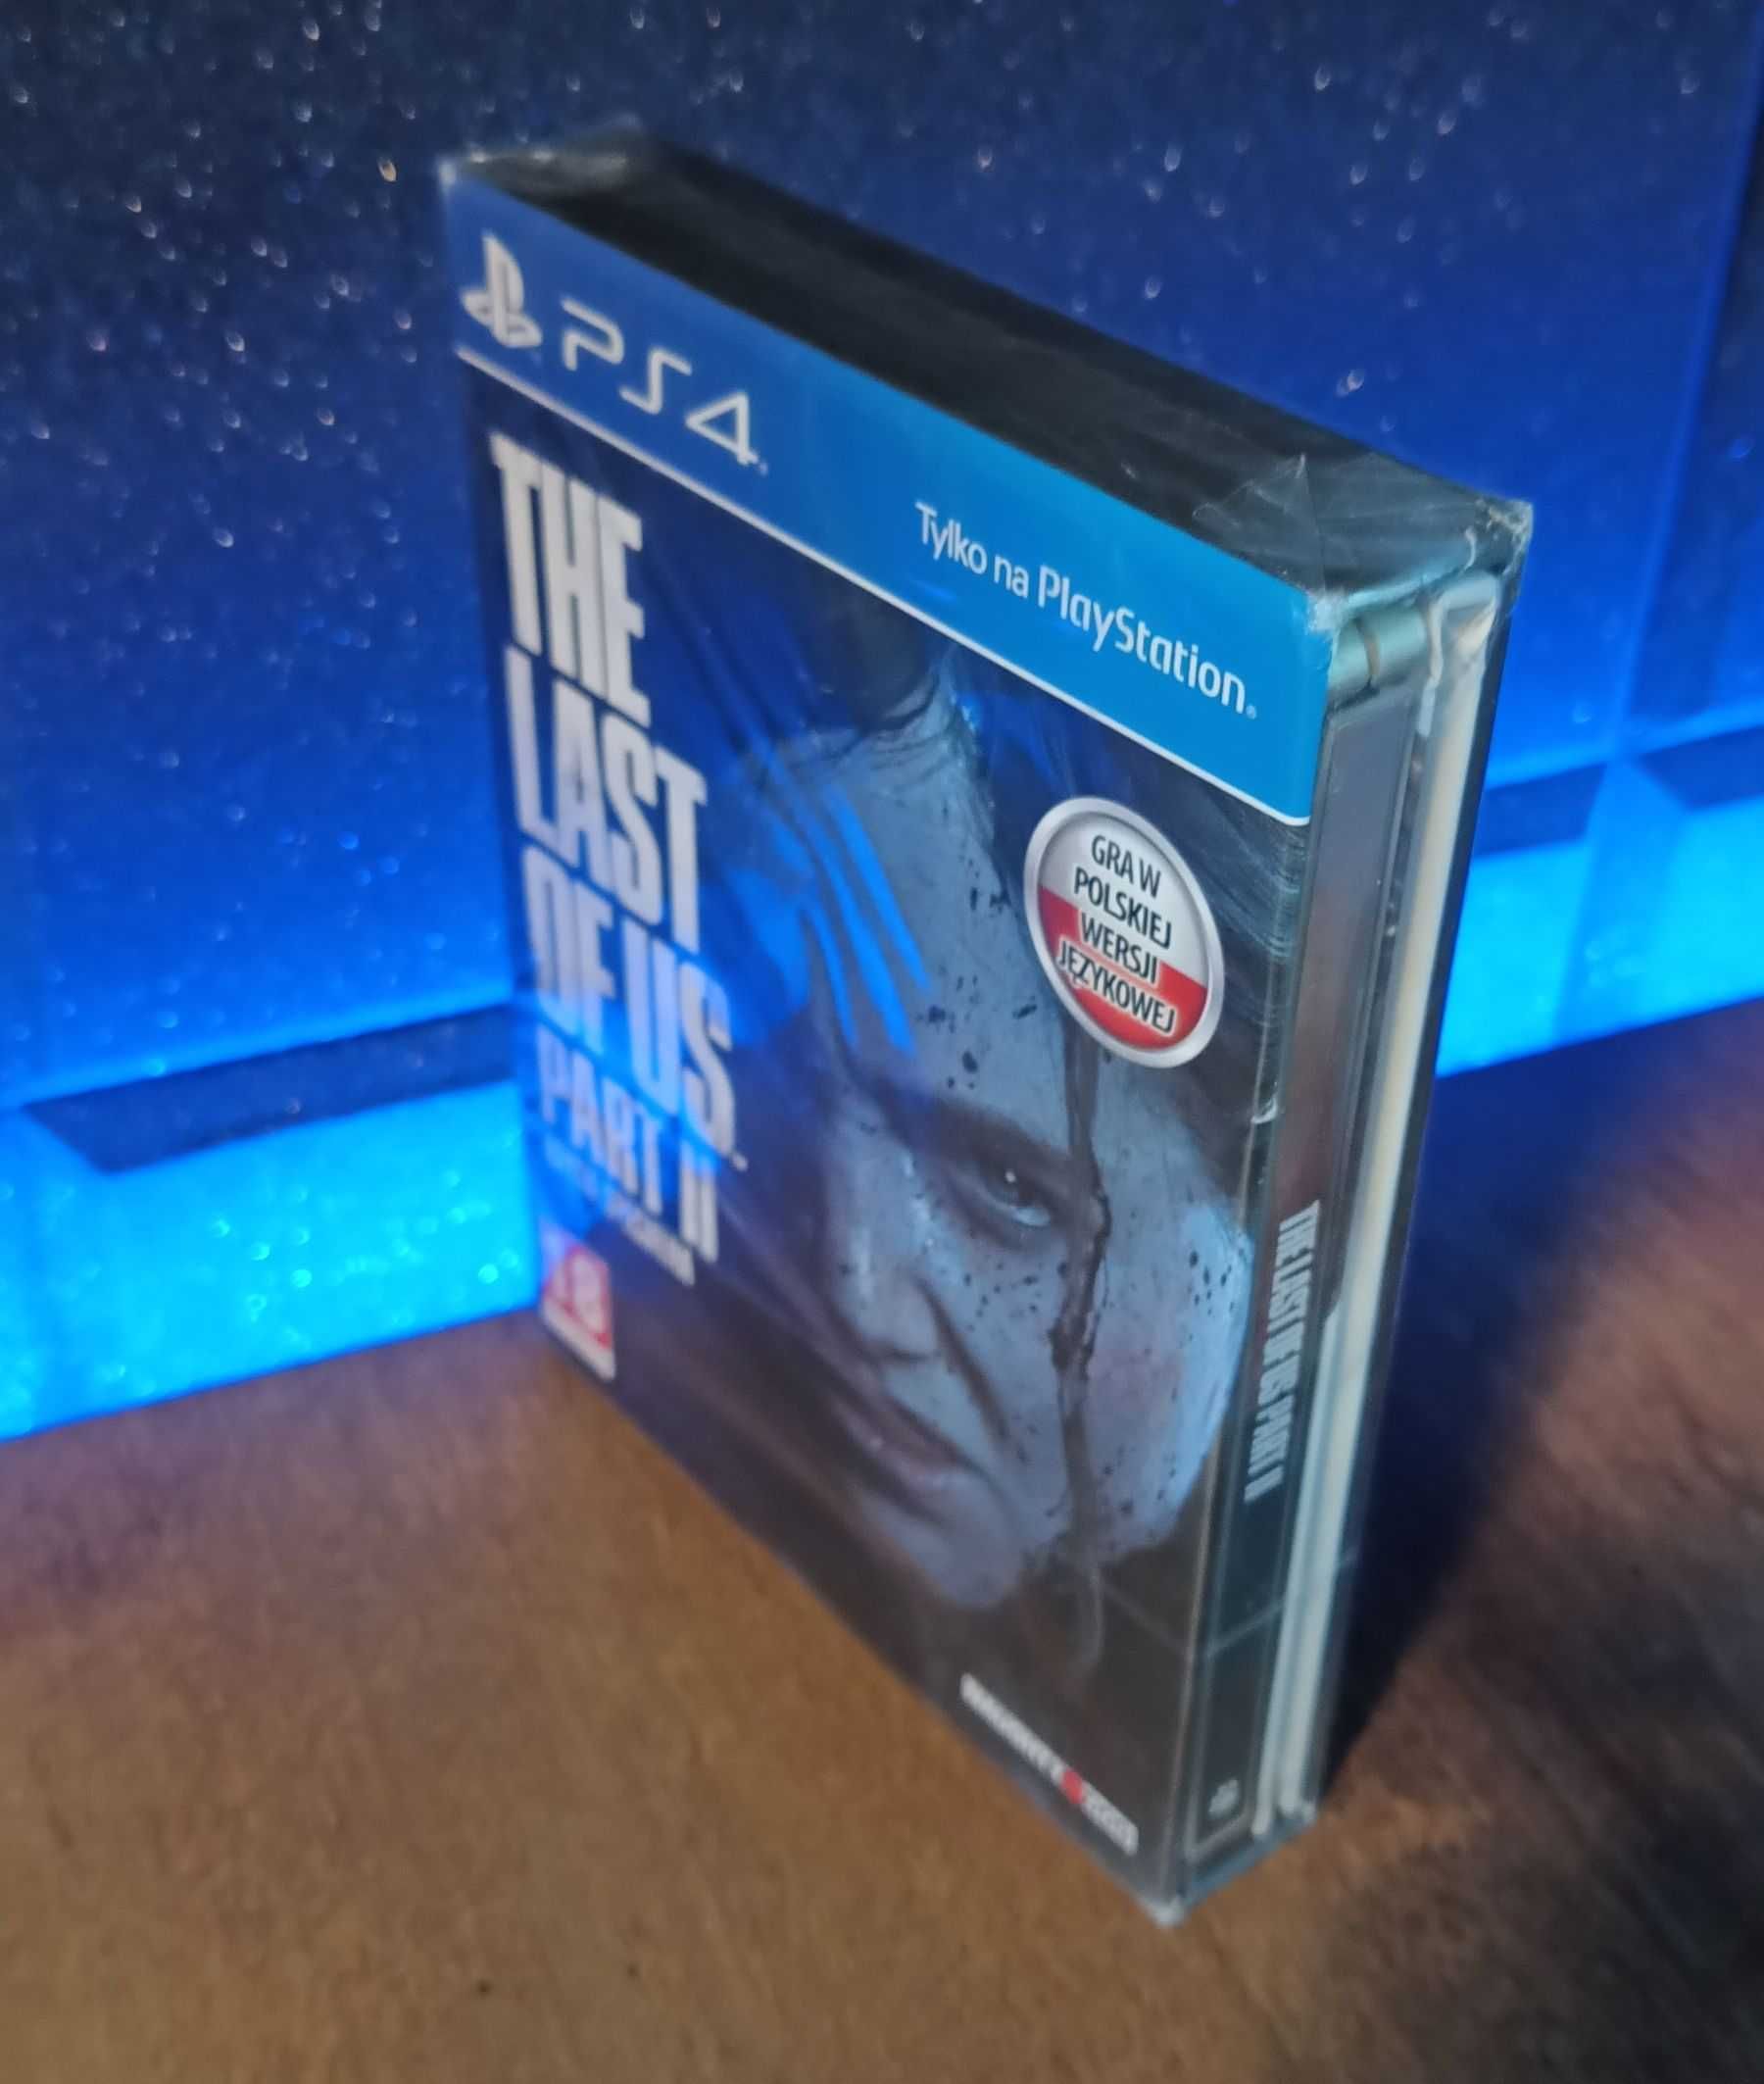 The Last of Us Part II Edycja specjalna PS4 / PS5 steelbook i artbook!